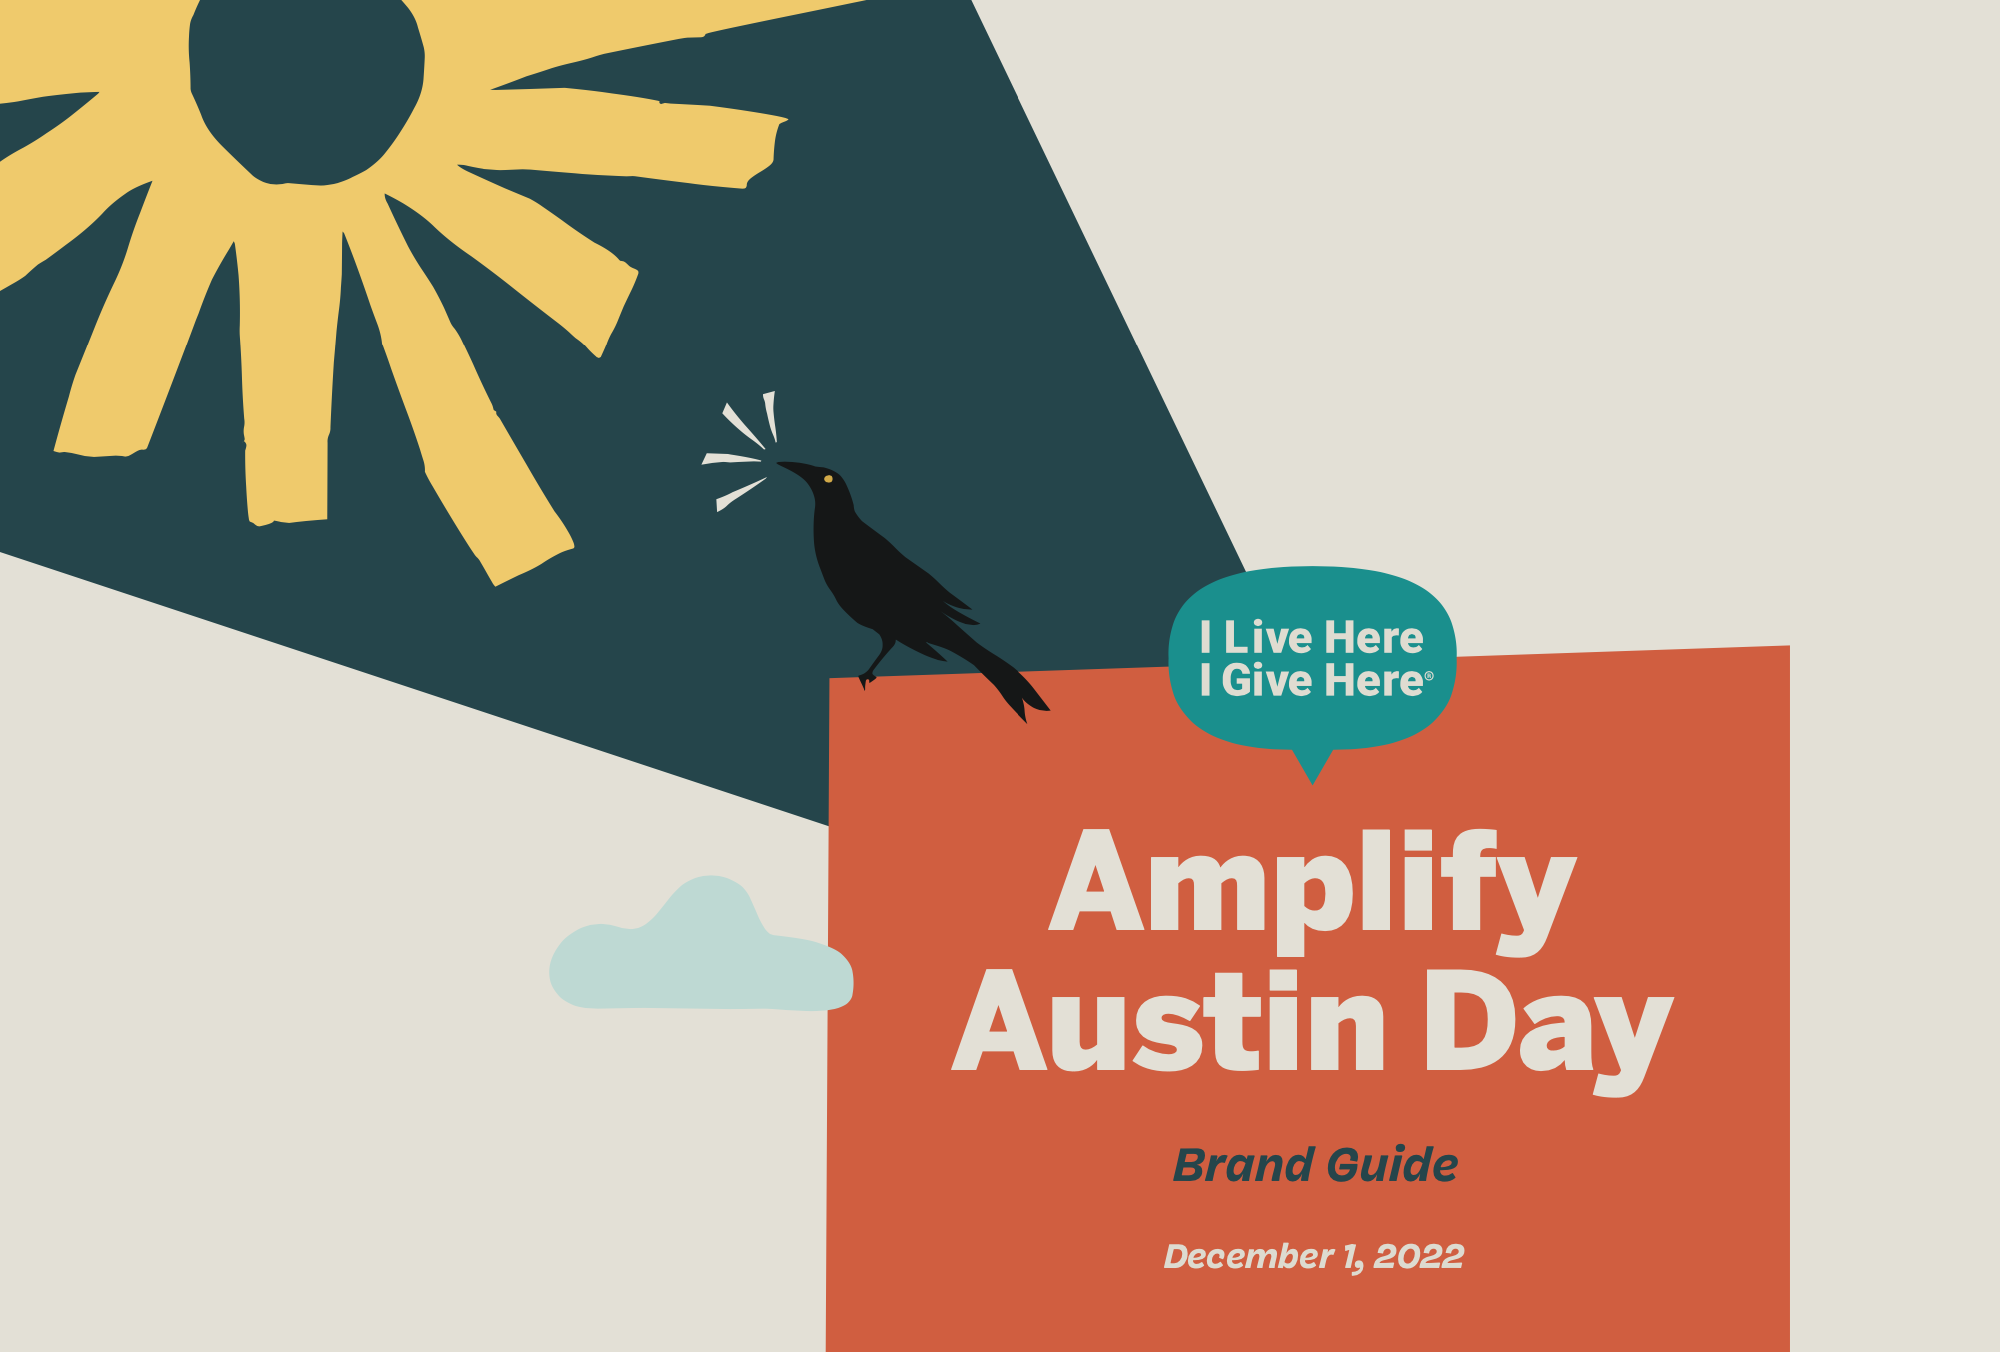 Amplify Austin Day Branding Guide